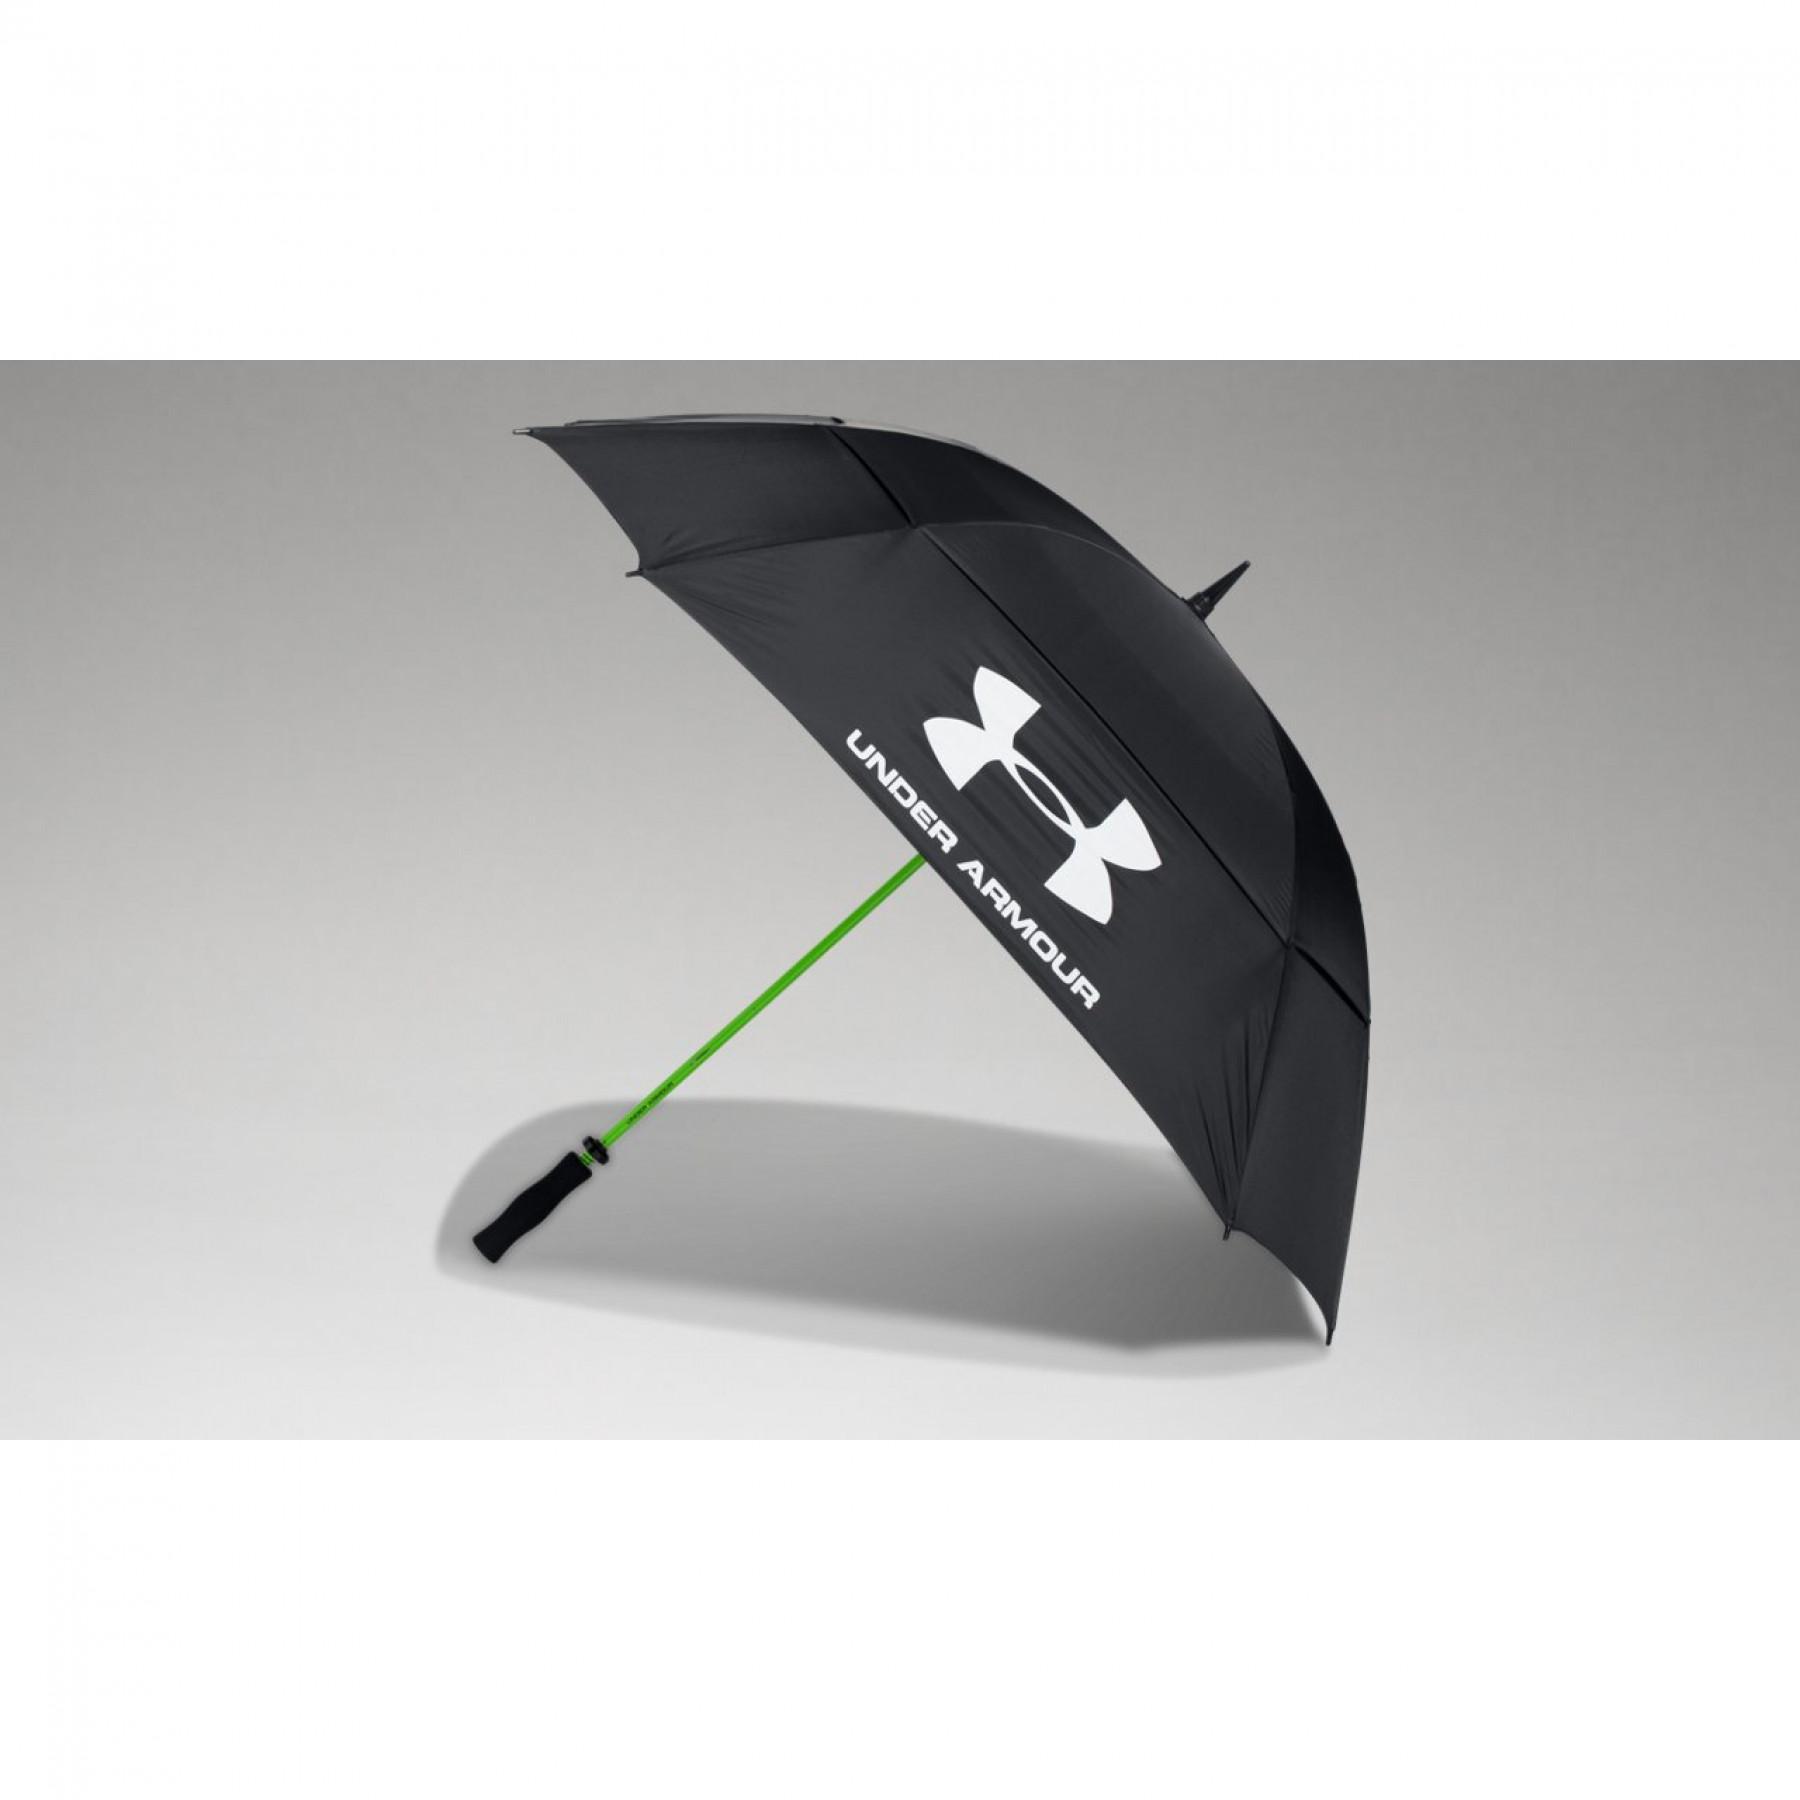 Regenschirm Under Armour Golf – Double toile